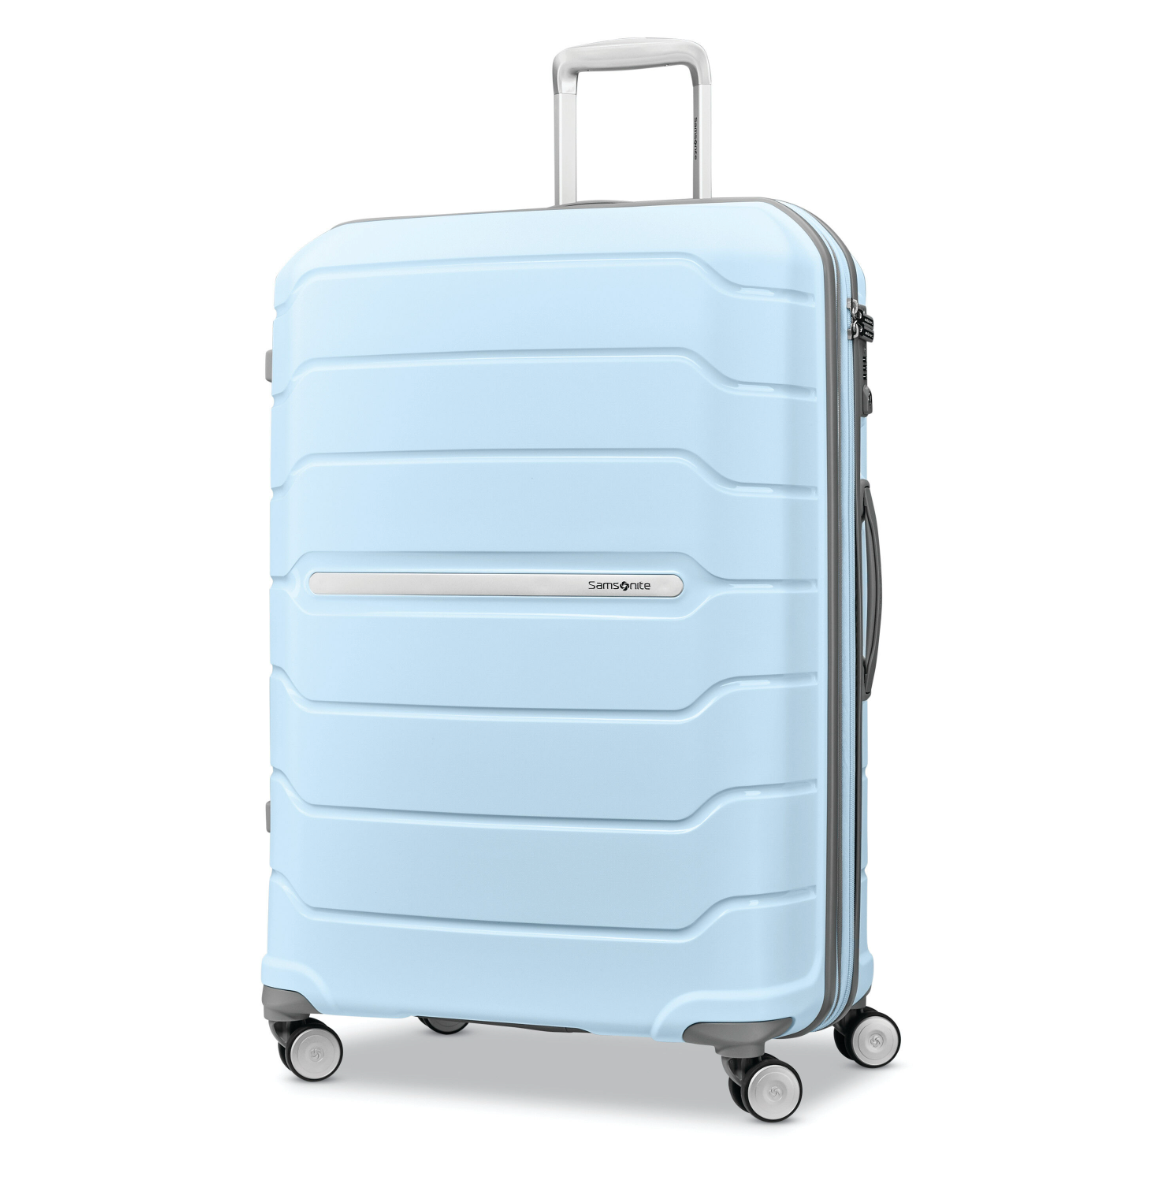 Middellandse Zee Figuur Rekwisieten Samsonite Luggage Is On Sale: Save 25% on Labor Day Travel Gear |  Entertainment Tonight